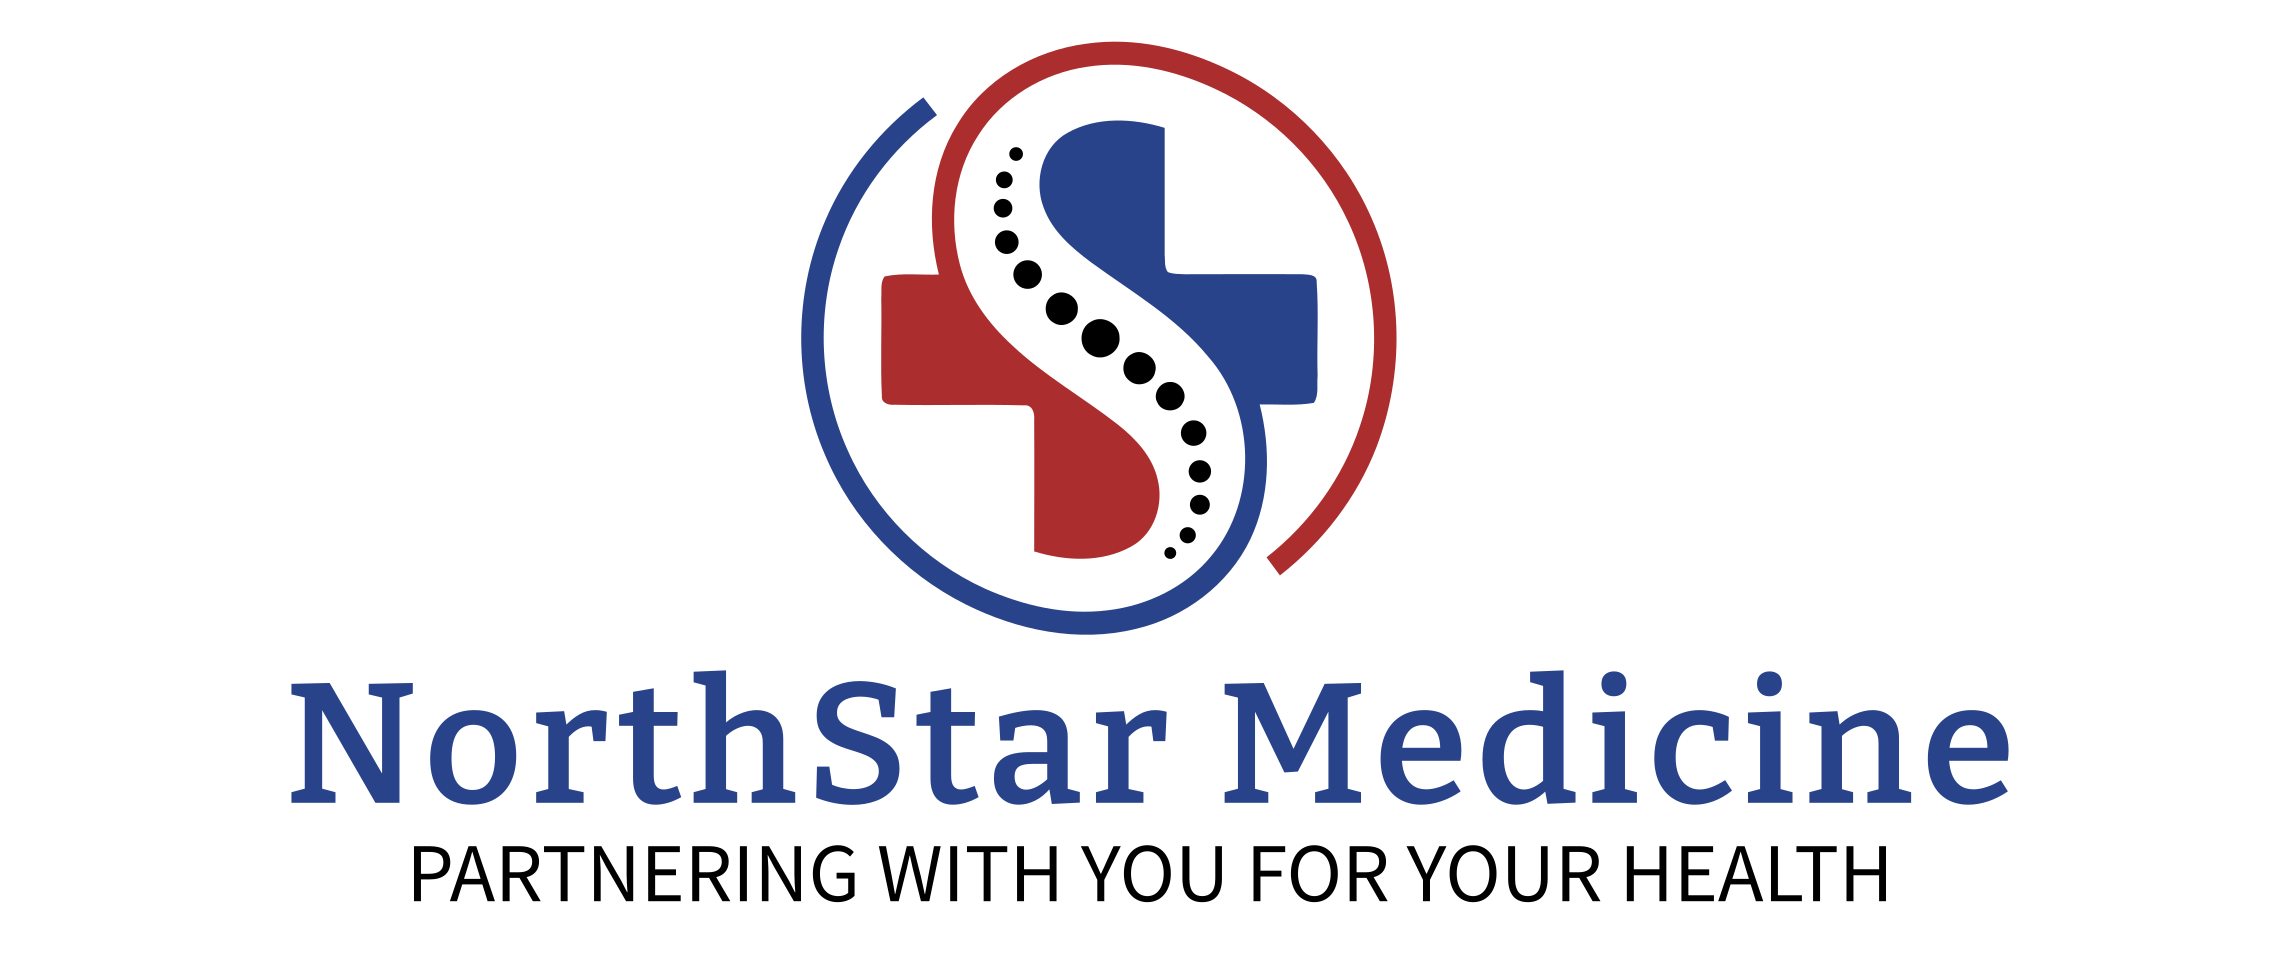 NorthStar Medicine